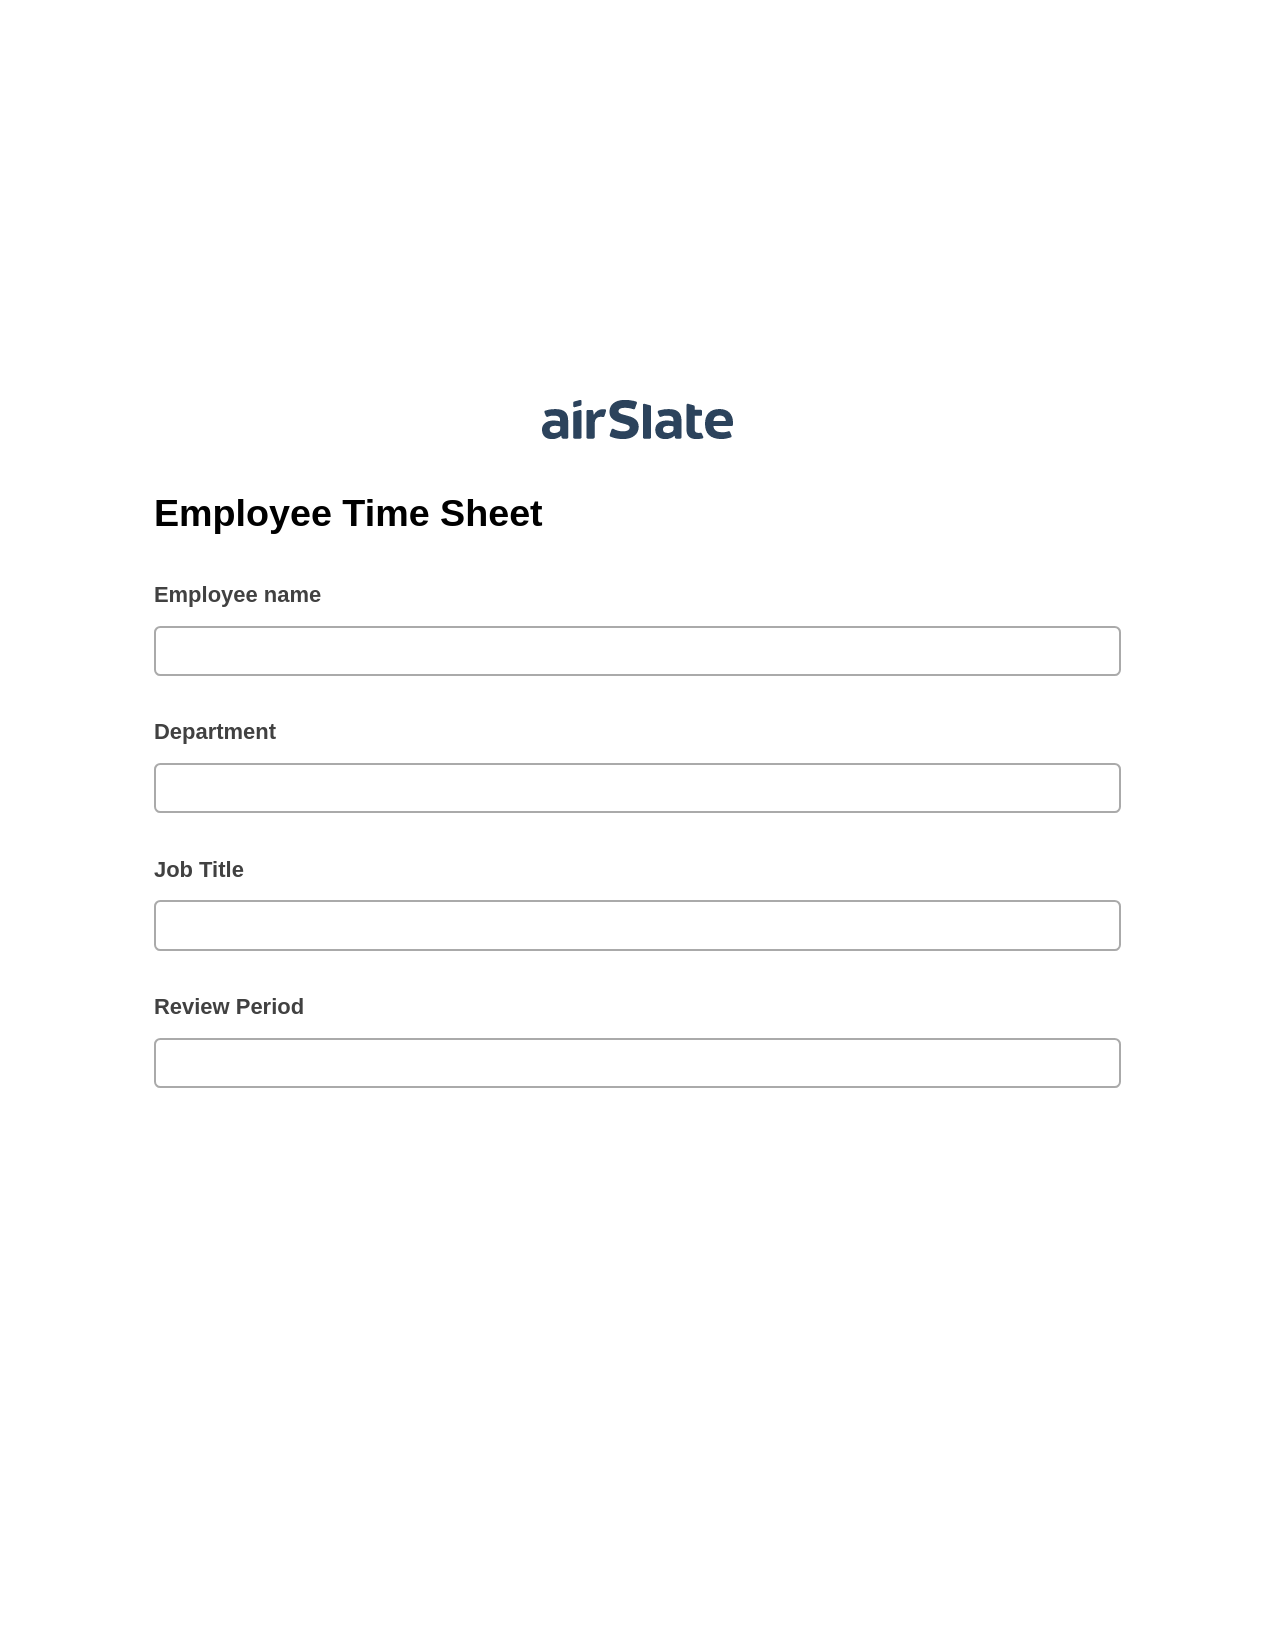 Multirole Employee Time Sheet Pre-fill from CSV File Bot, Create slate addon, Export to MySQL Bot